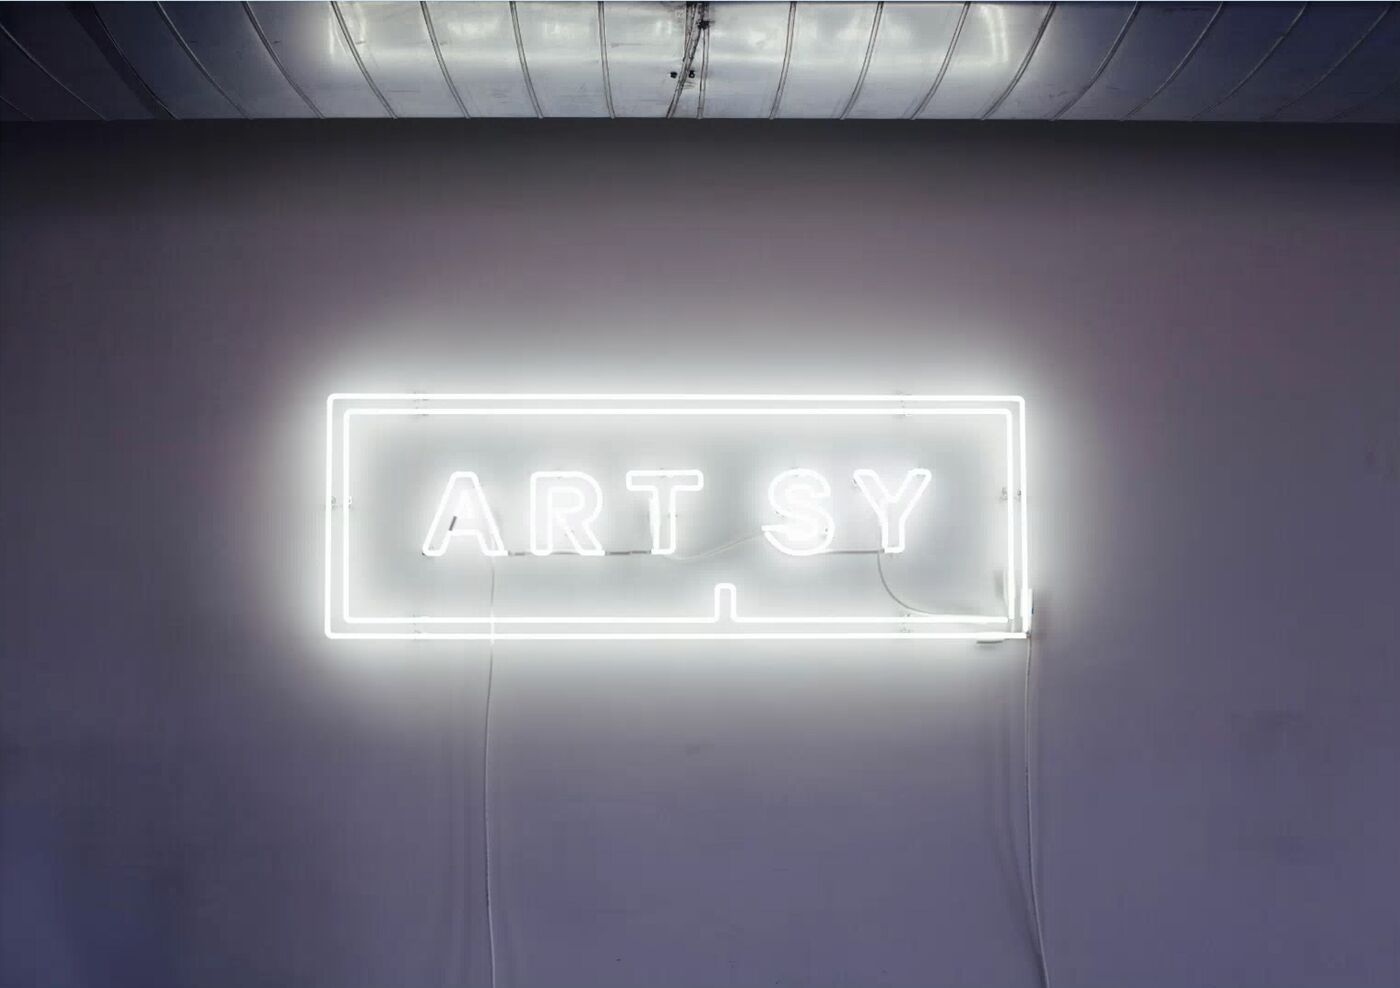 New York’s Artsy Is Making It Even Easier to Buy Art Online - Bloomberg